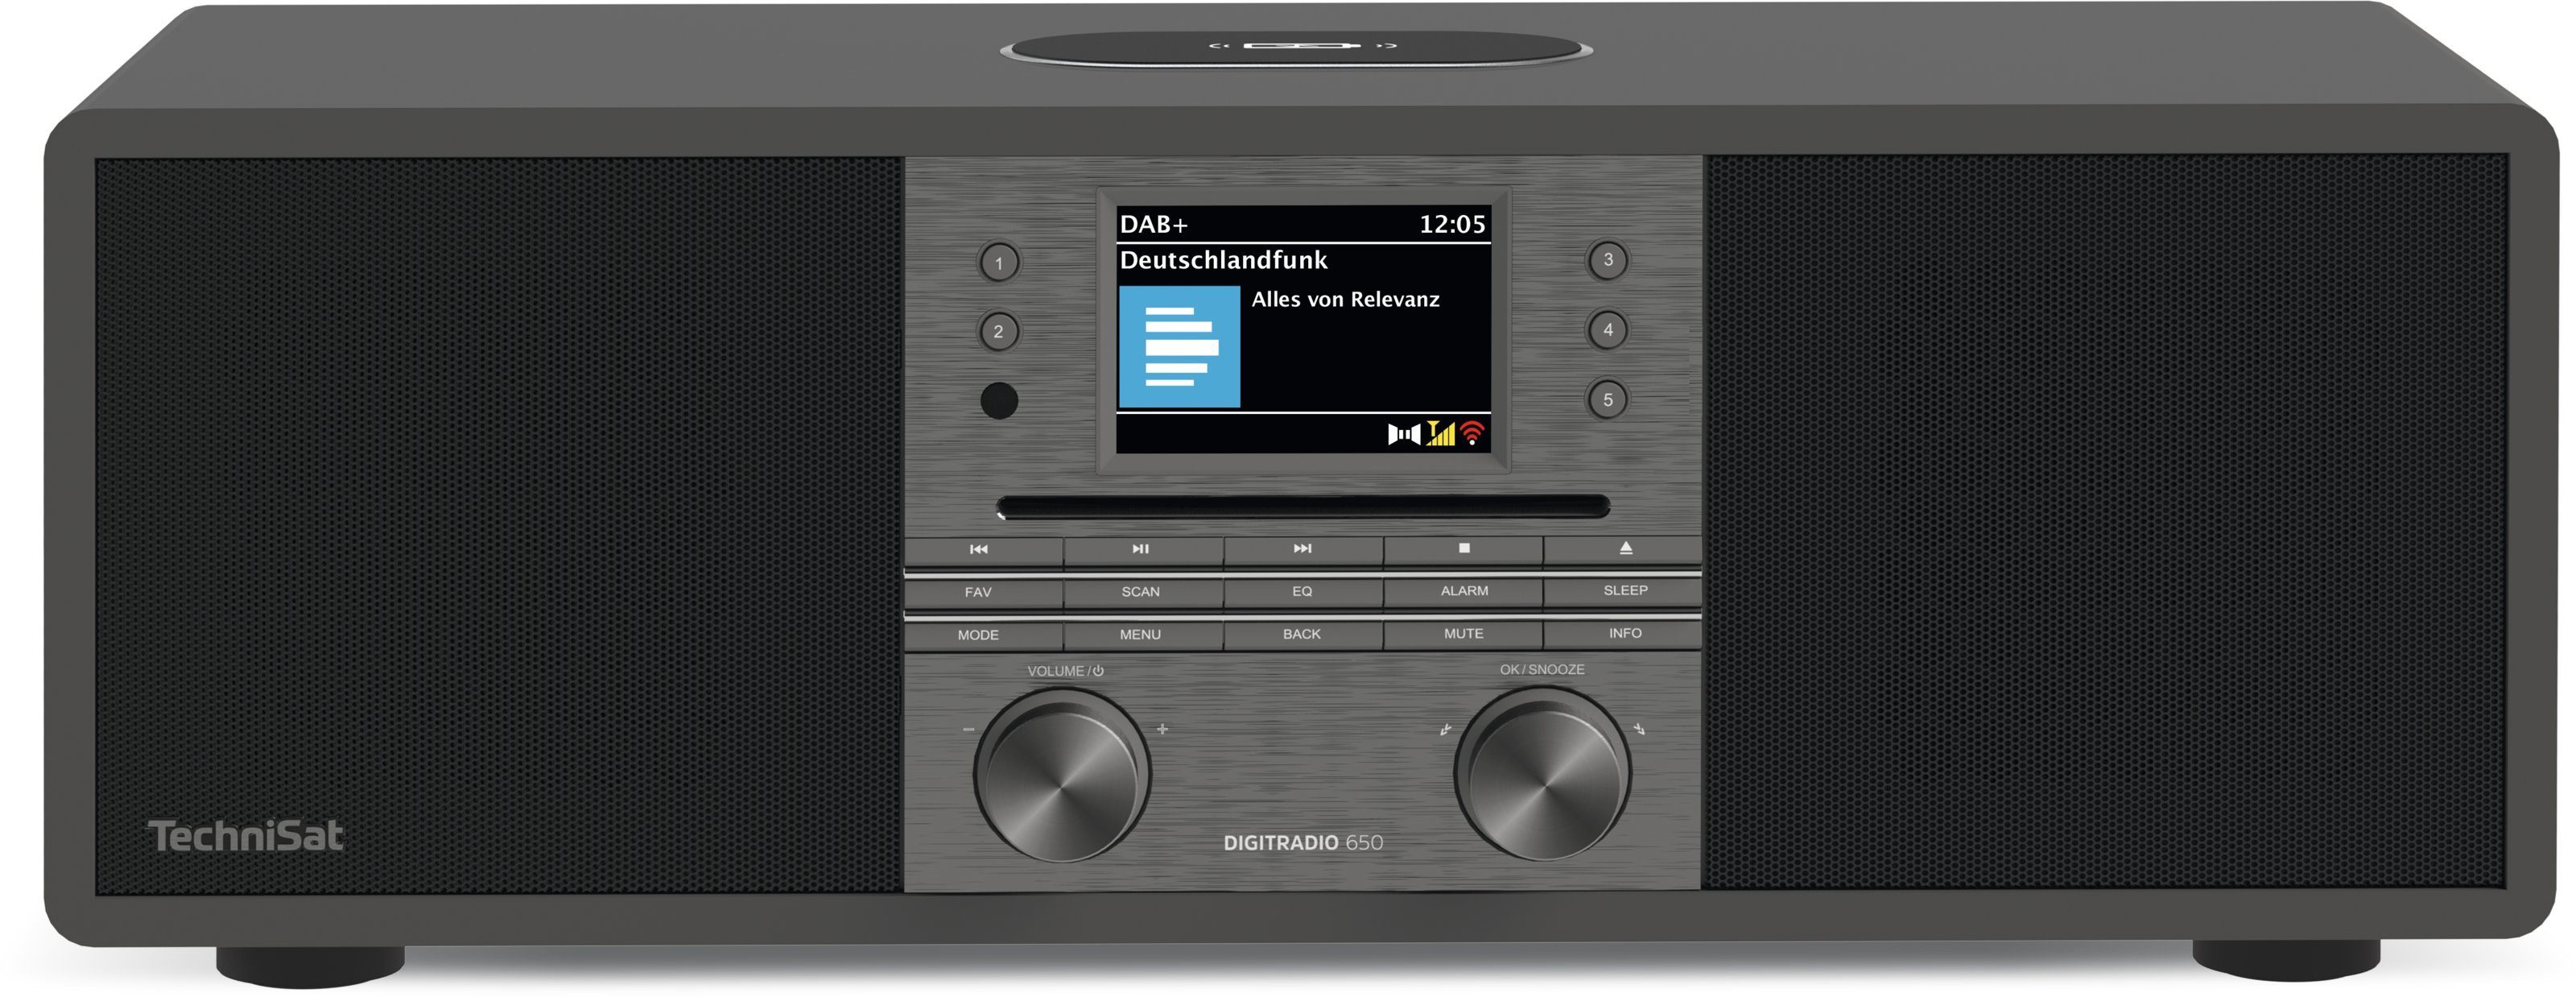 TechniSat DIGITRADIO 650 Digitalradio (DAB) (Digitalradio (DAB), UKW mit RDS, Internetradio, 70,00 W, HiFi-Anlage, DAB+, UKW, Audiostreaming, Wireless-Charging, 2.1 Soundsystem)